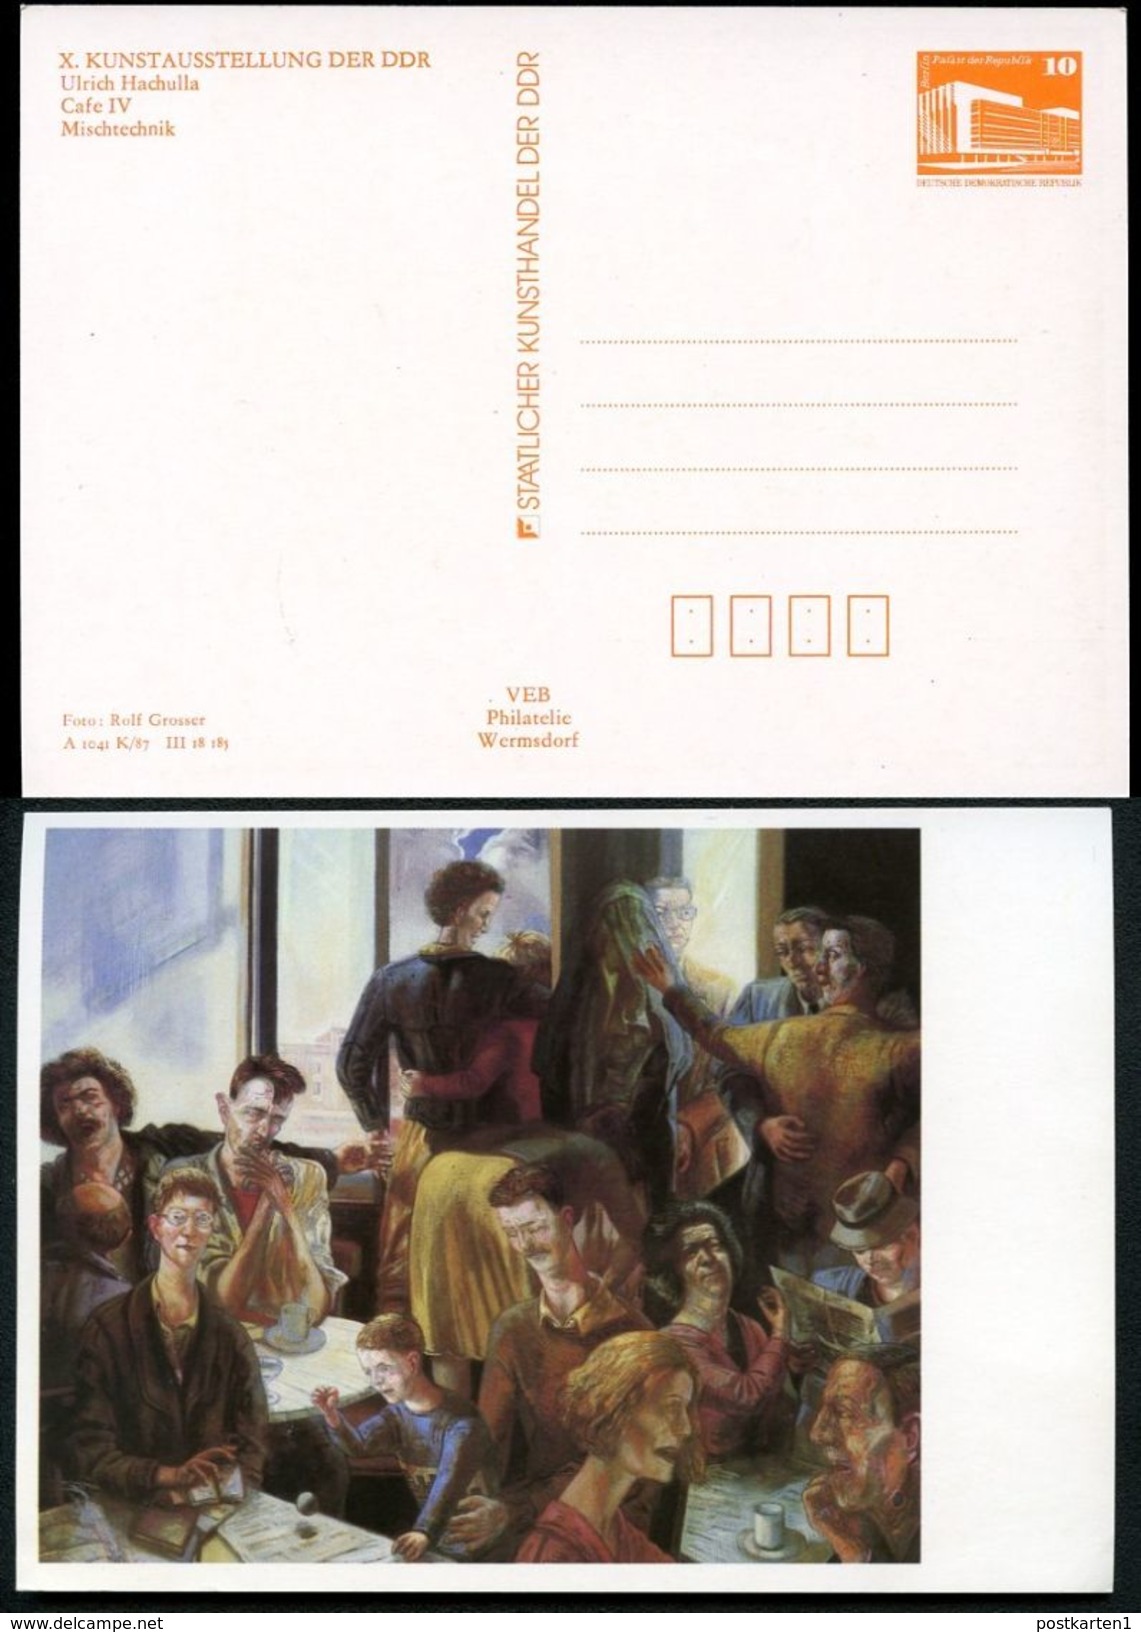 DDR Privat-Postkarte PP19 B1/012-1b KUNSTAUSSTELLUNG DRESDEN 1987  NGK 3,00 € - Private Postcards - Mint